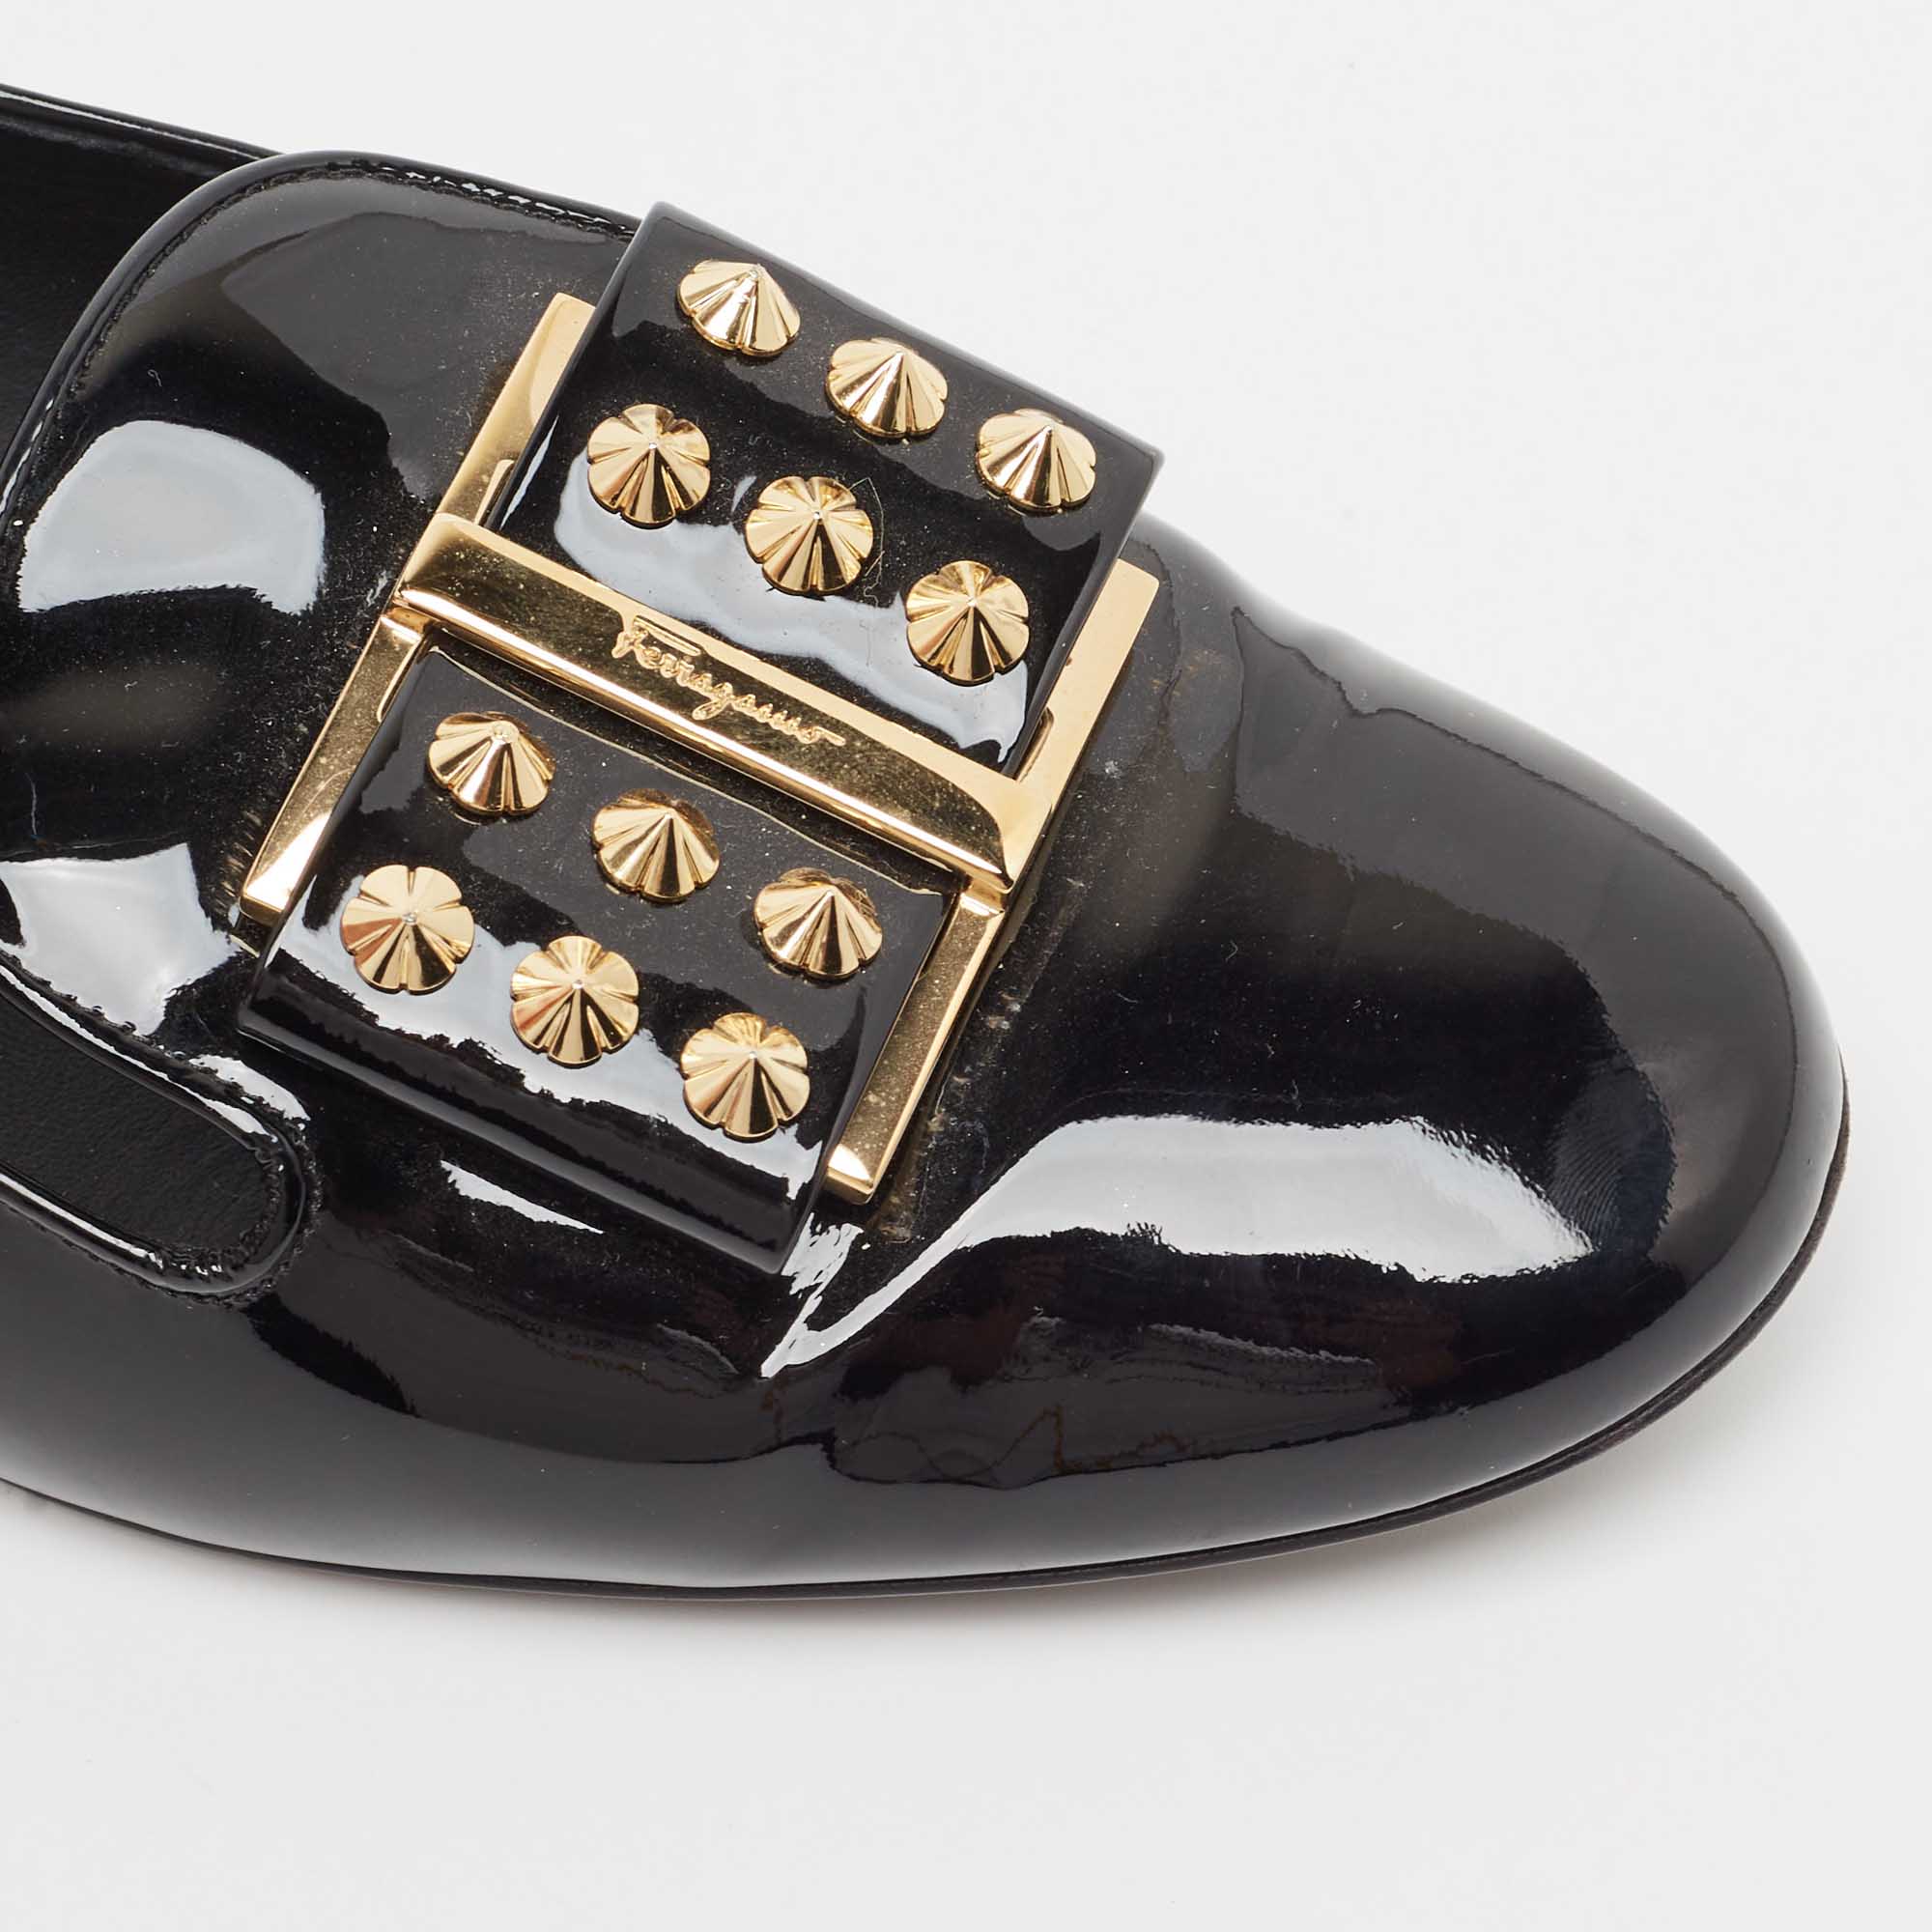 Salvatore Ferragamo Black Patent Leather Smoking Slippers Size 40.5